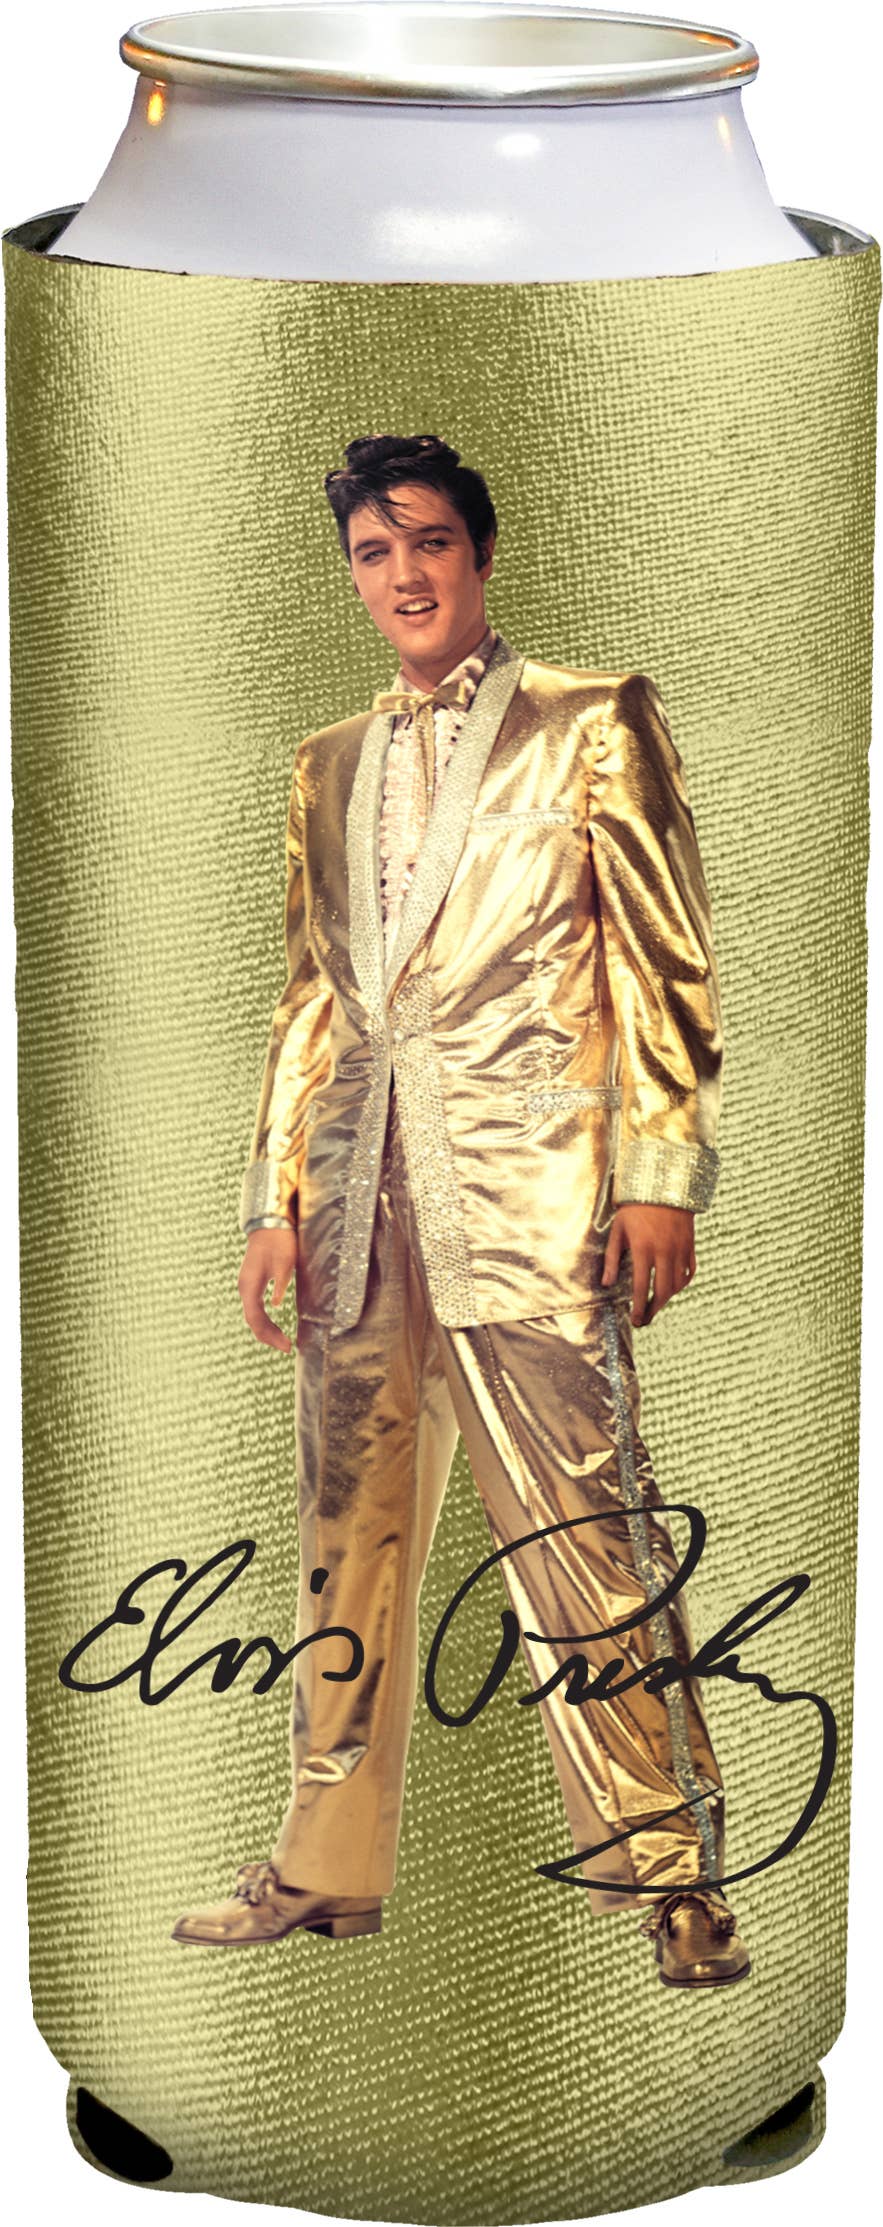 Elvis Gold Suit Tall Slim Can Holder Koozie